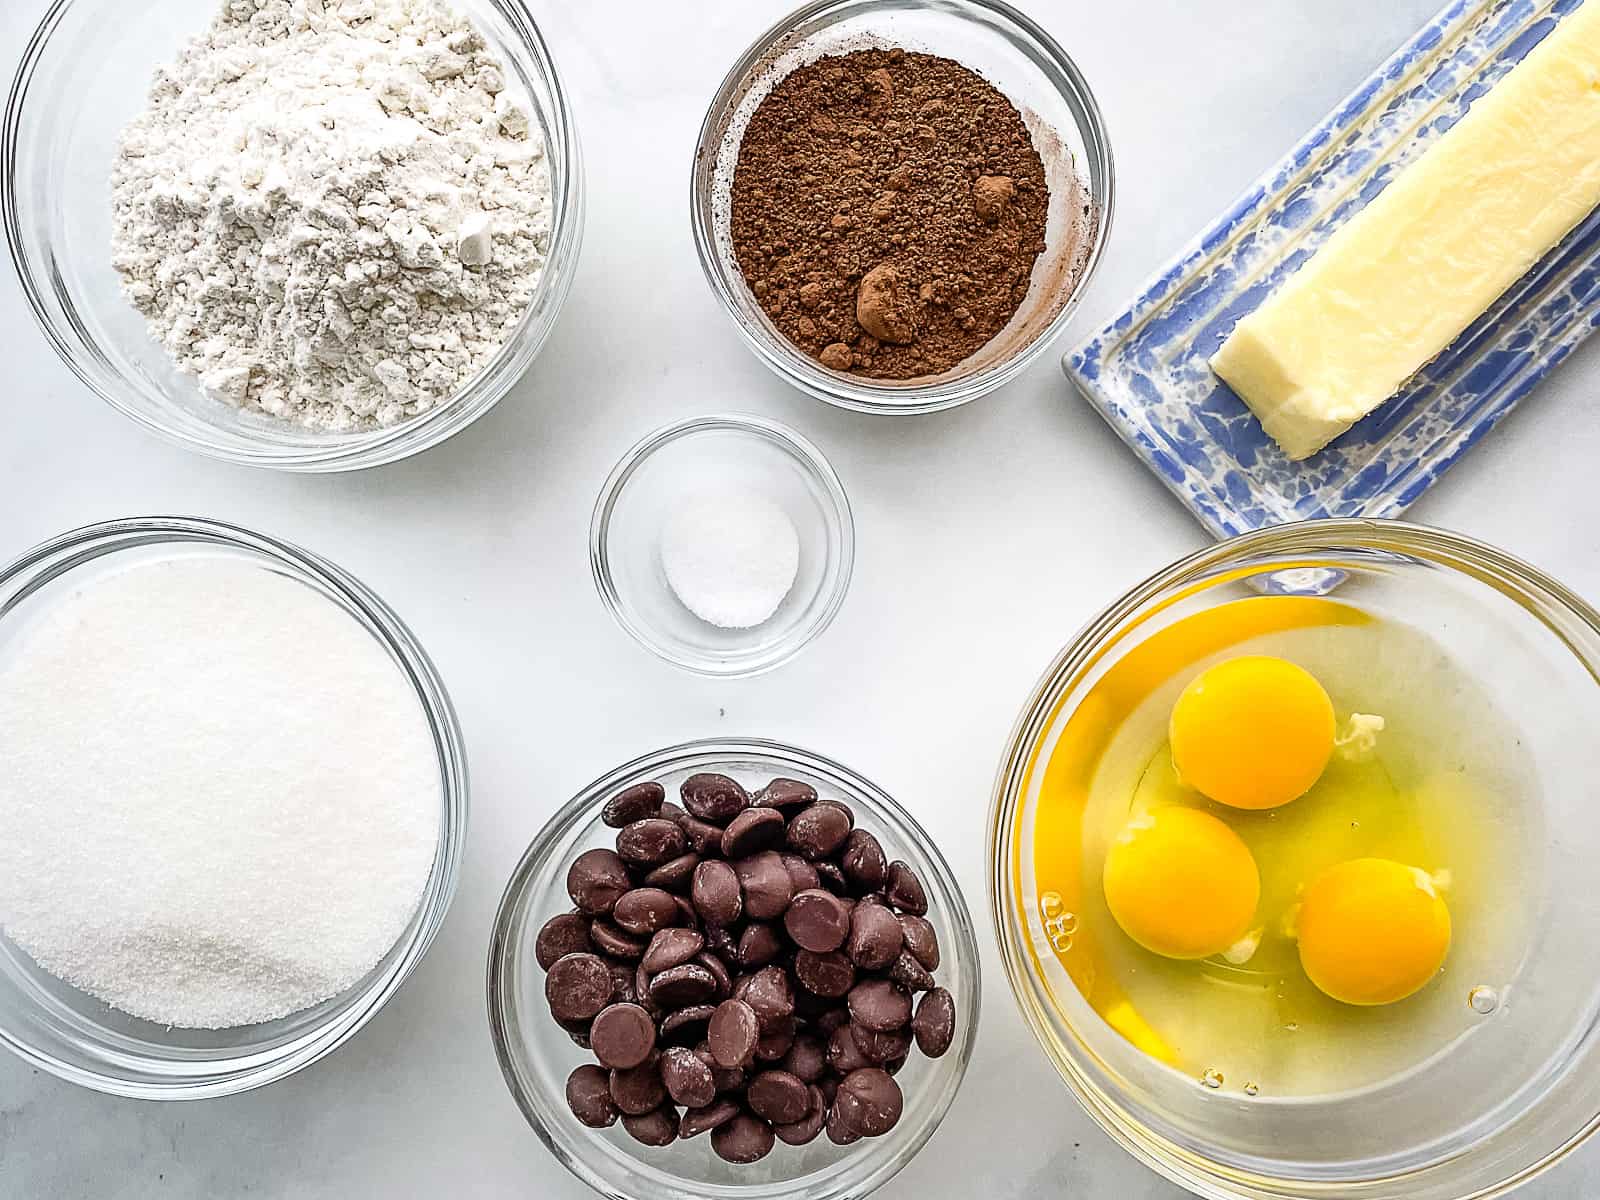 Ingredients for gluten-free brownies in bowls.